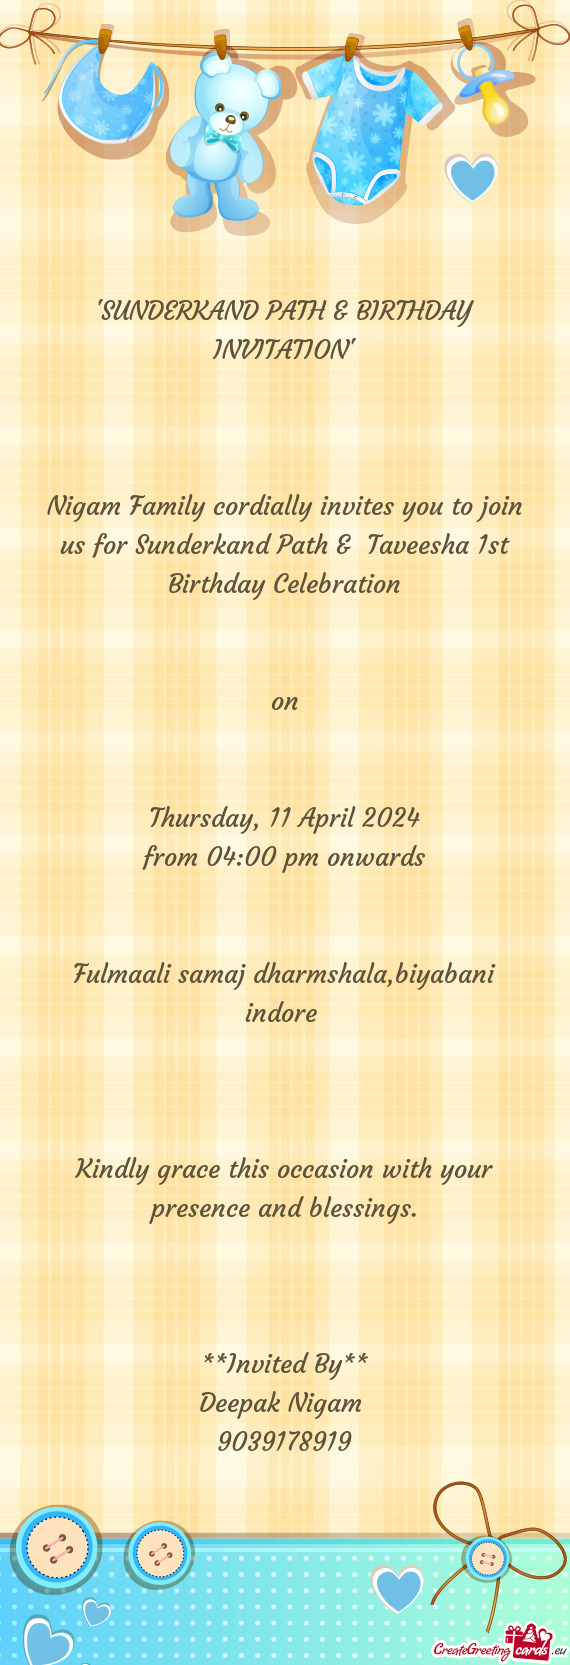 Nigam Family cordially invites you to join us for Sunderkand Path & Taveesha 1st Birthday Celebrati